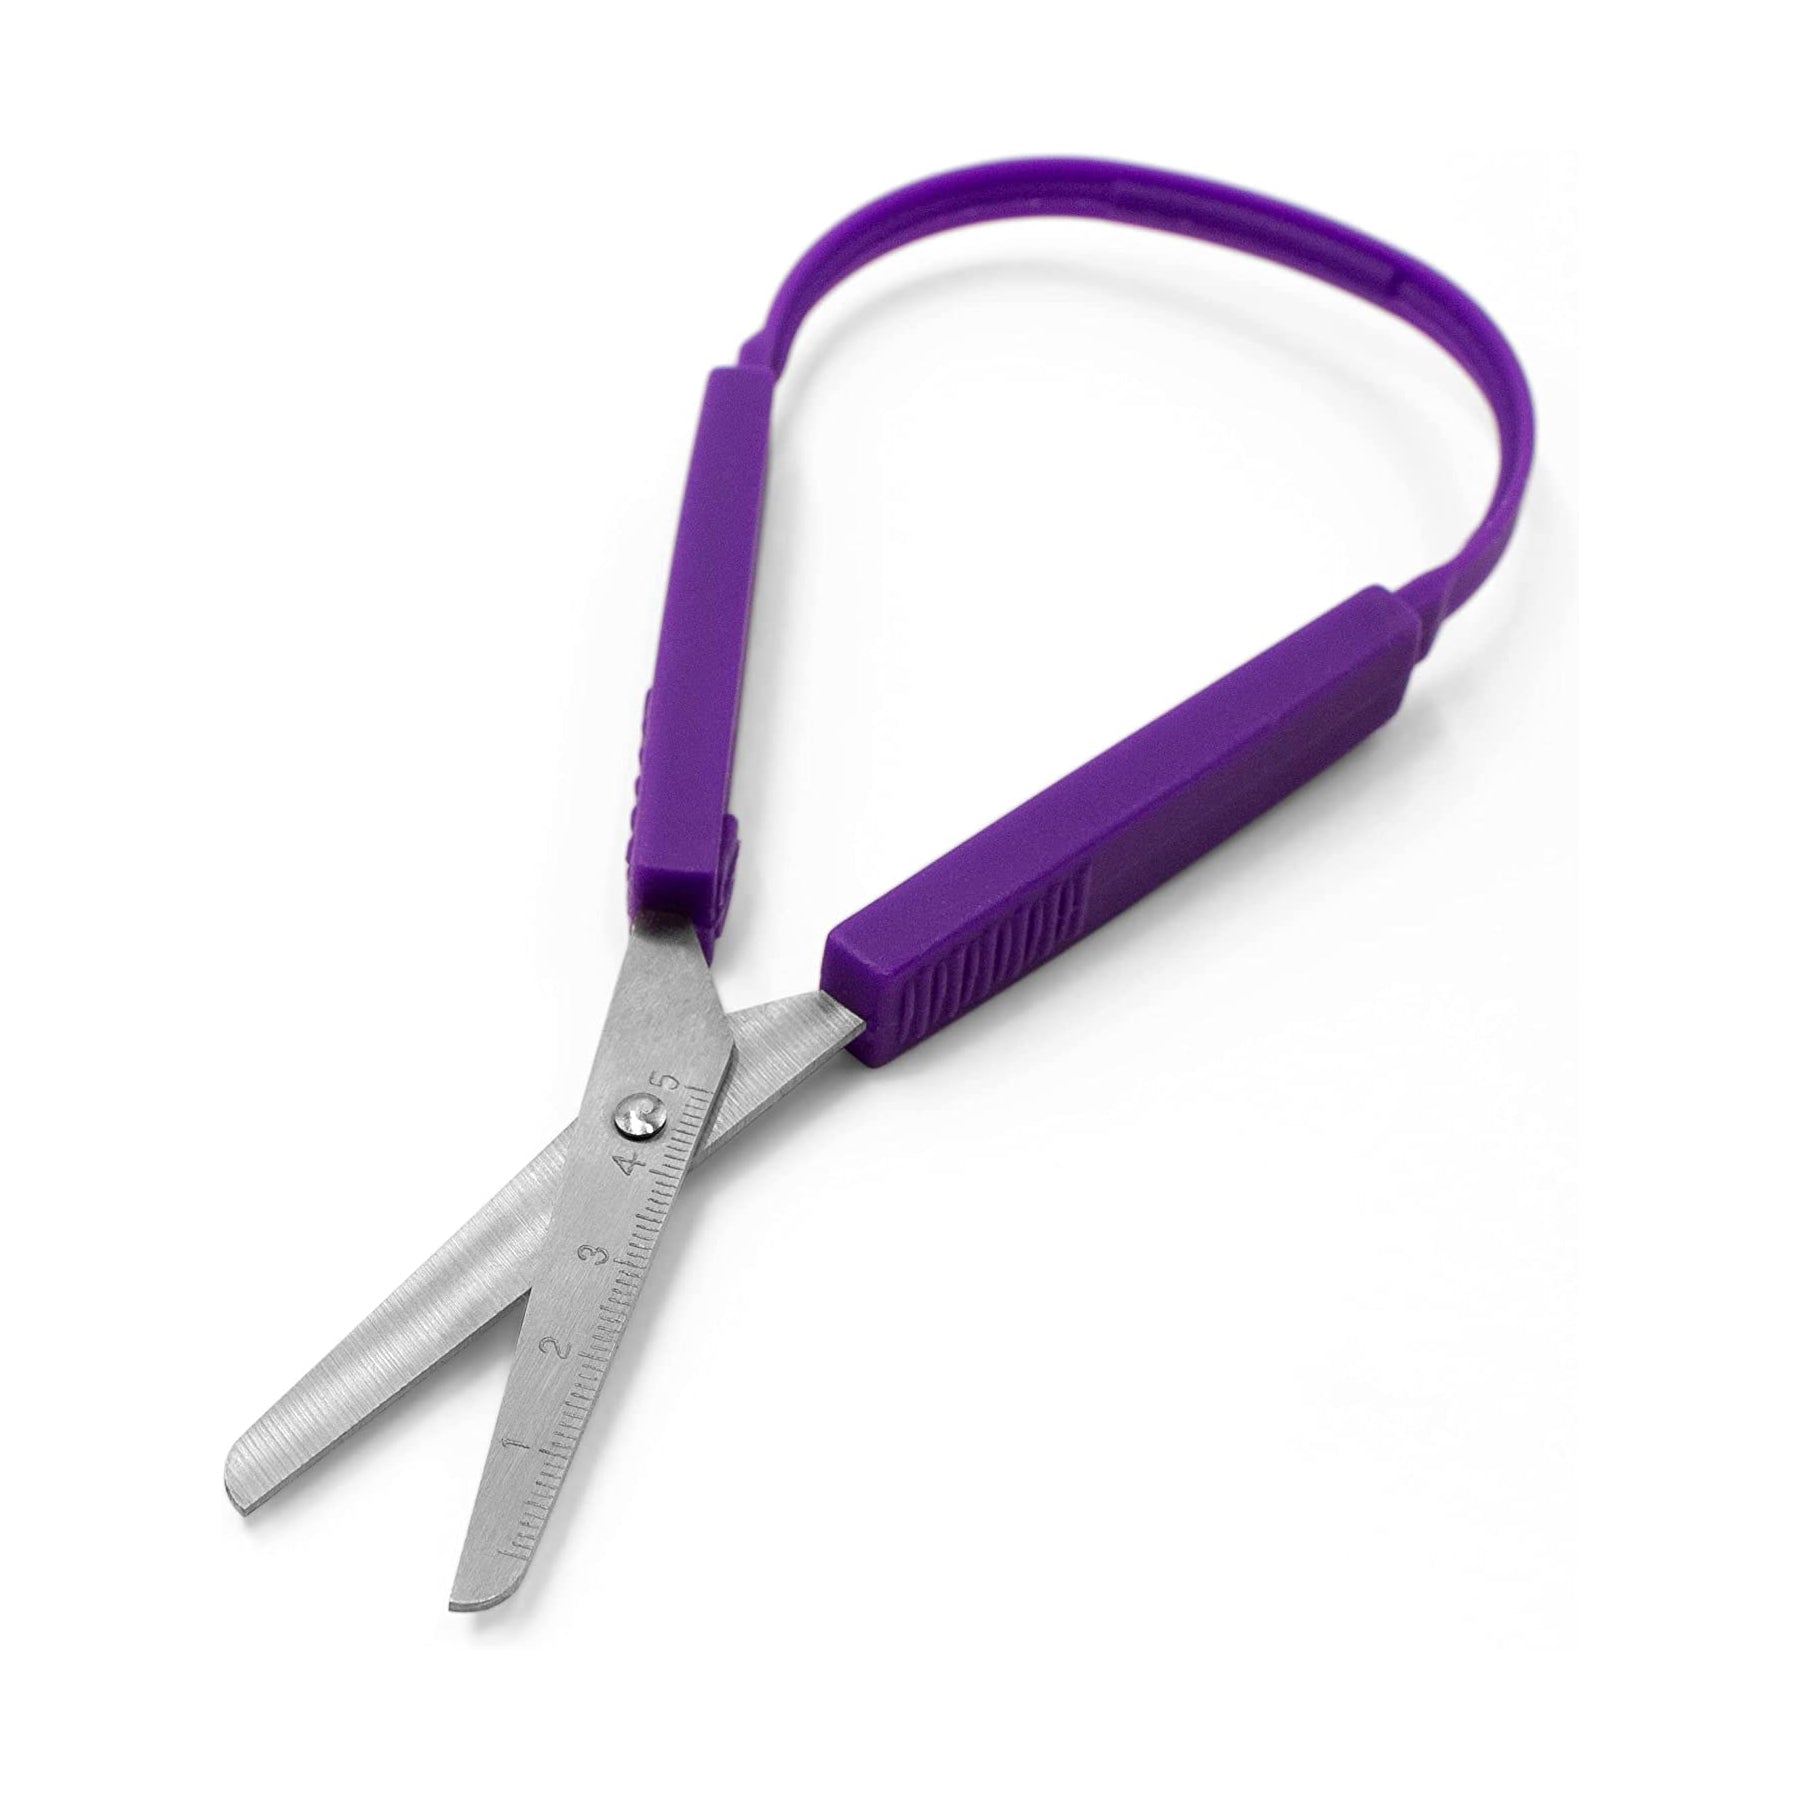 Safety Scissors for Kids, Self-Opening Scissors